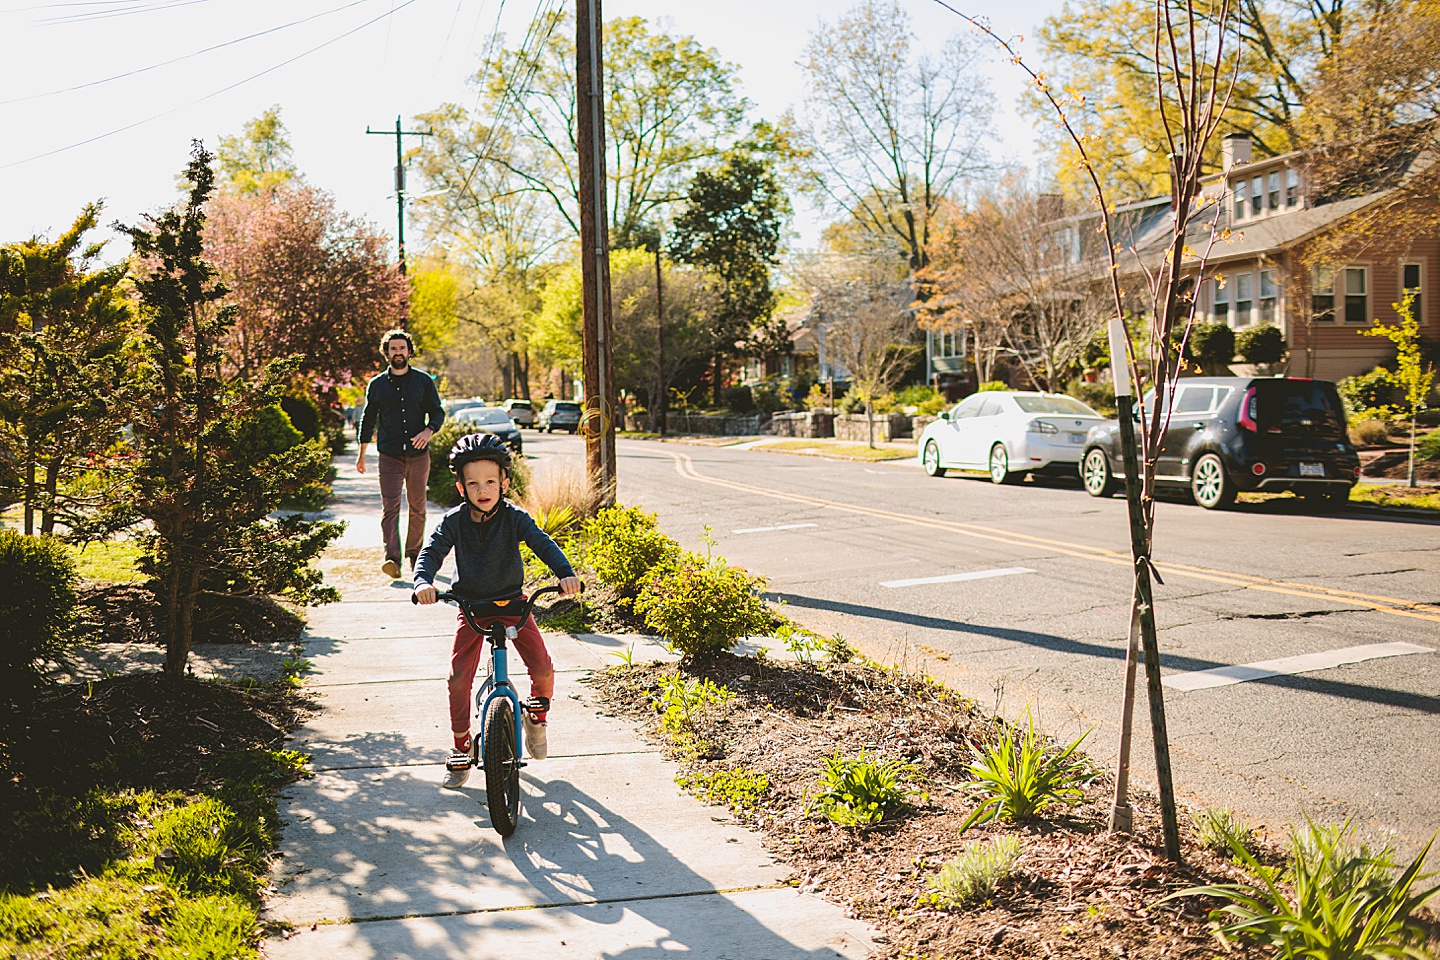 Boy riding bike in neighborhood